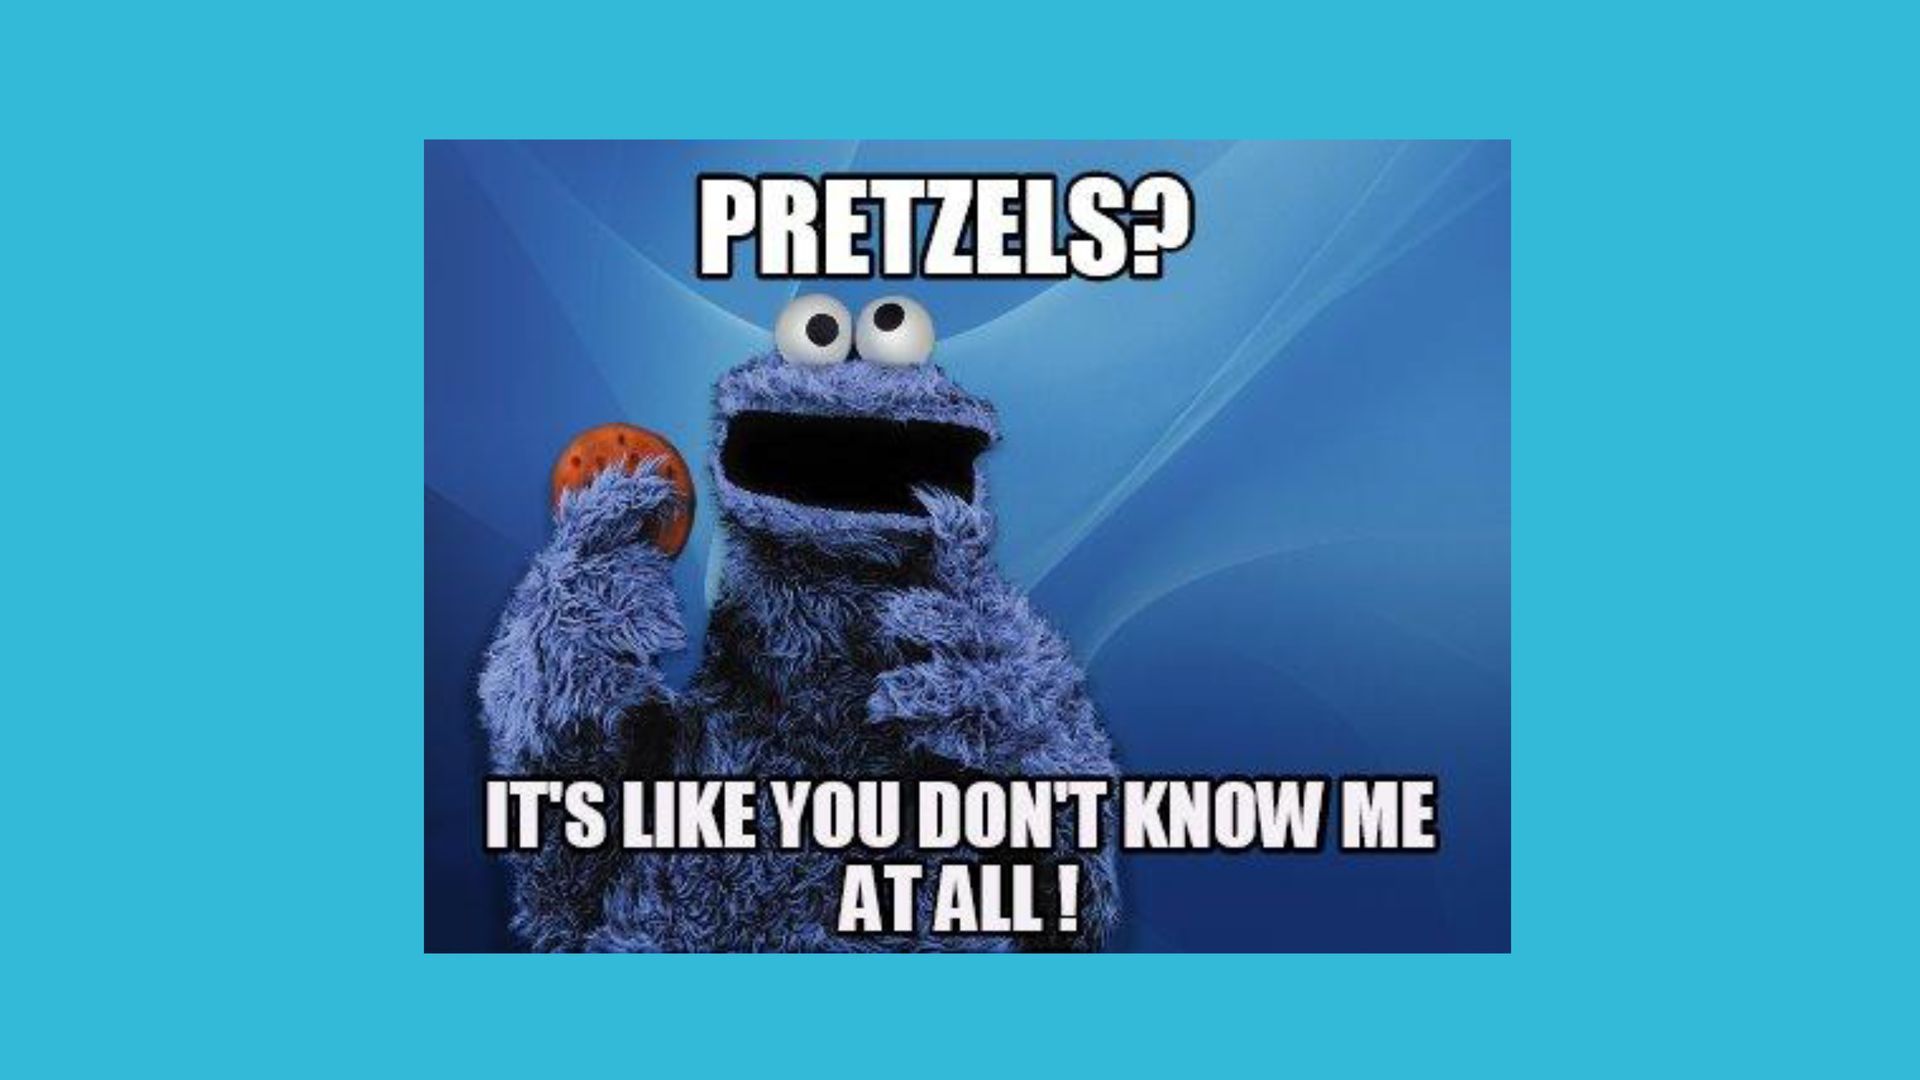 Cookie Monster holding a pretzel